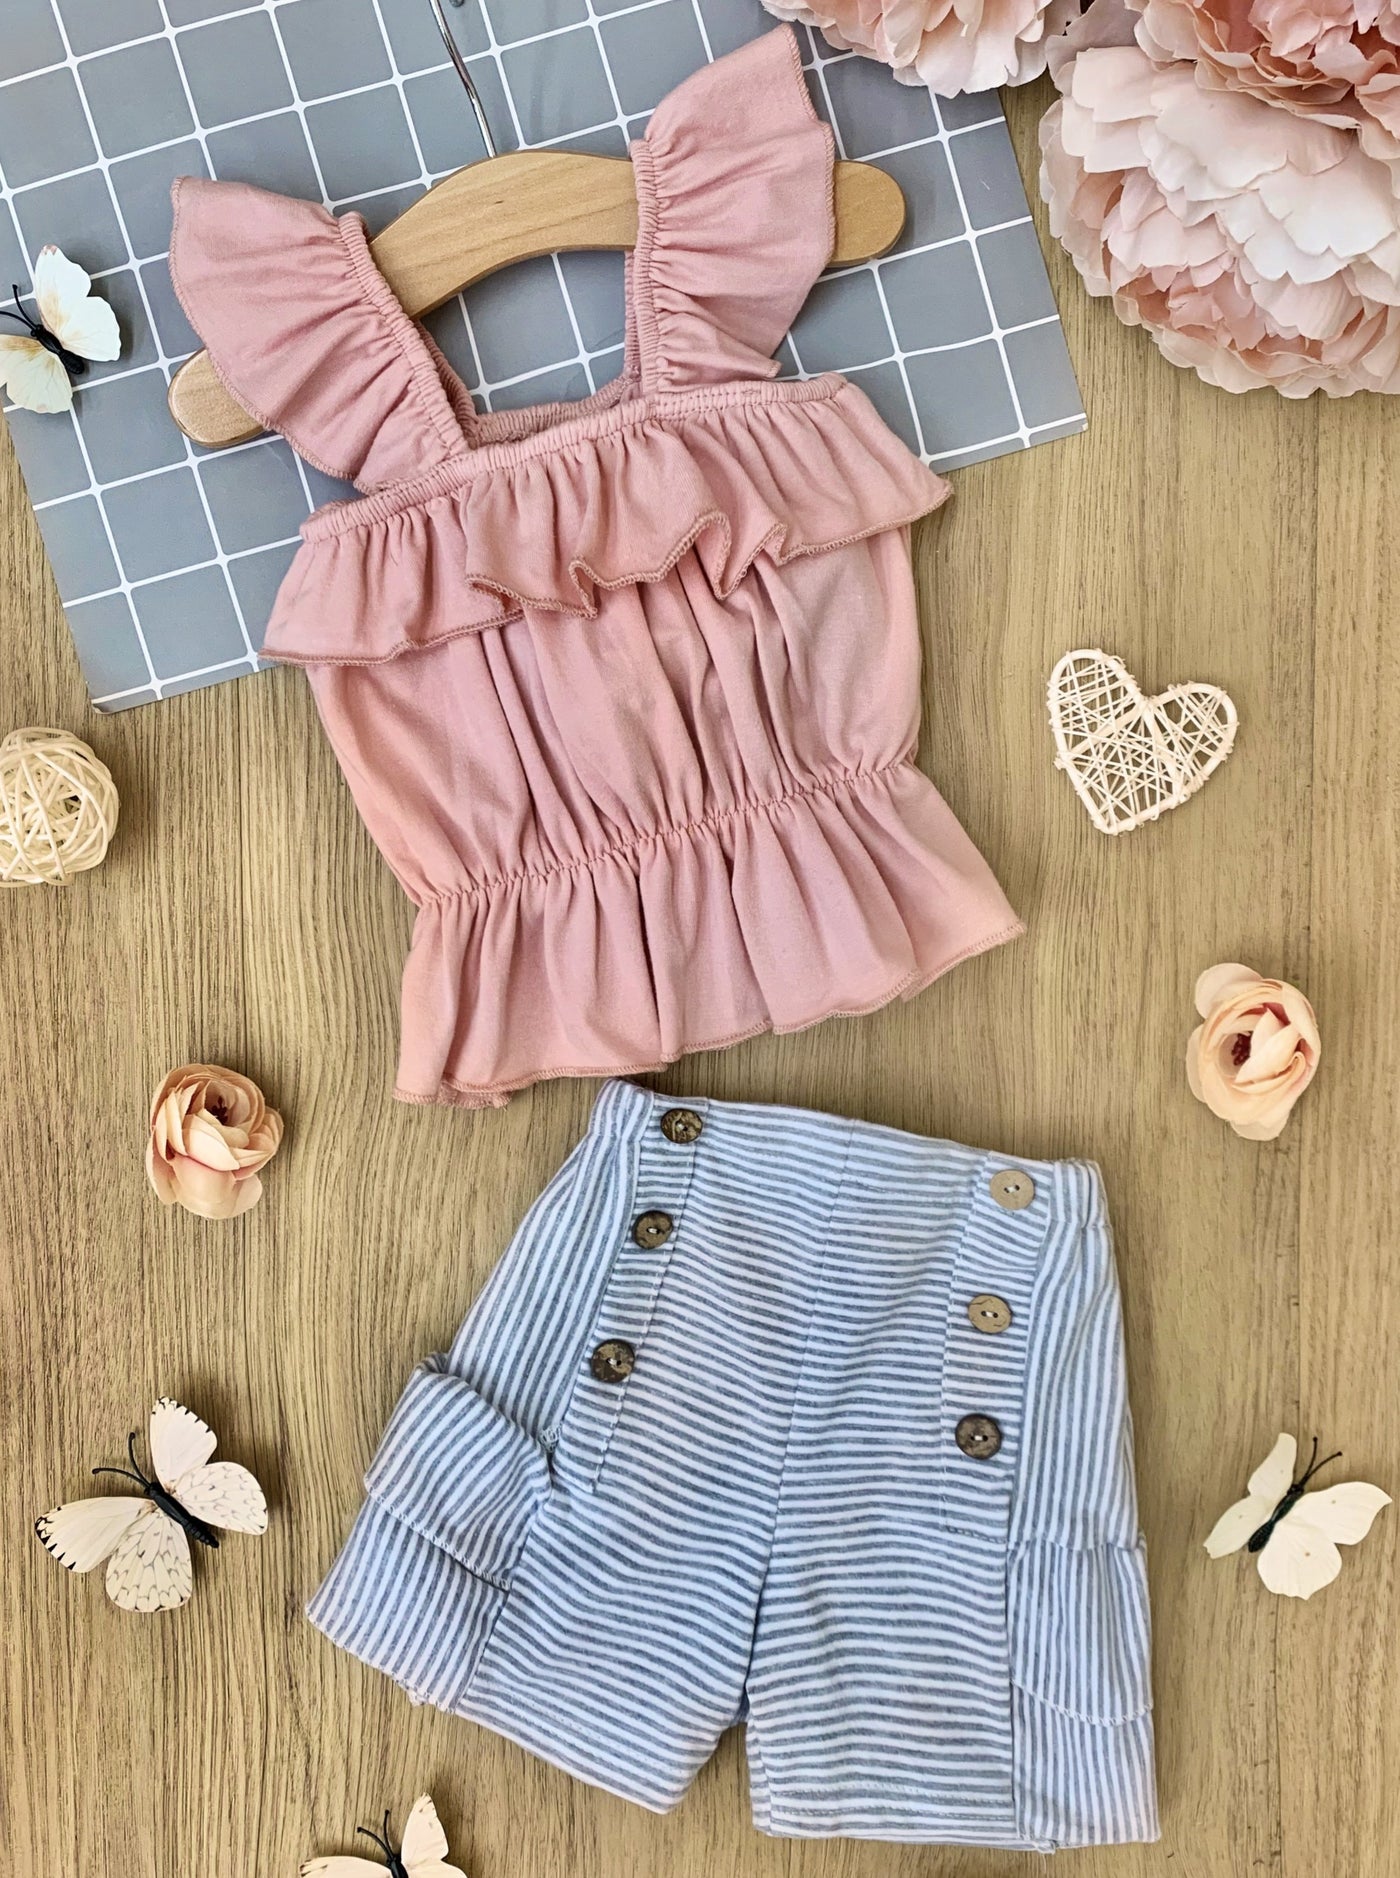 Toddler Spring Outfits | Girls Stylish Peplum Top & Stripes Shorts Set